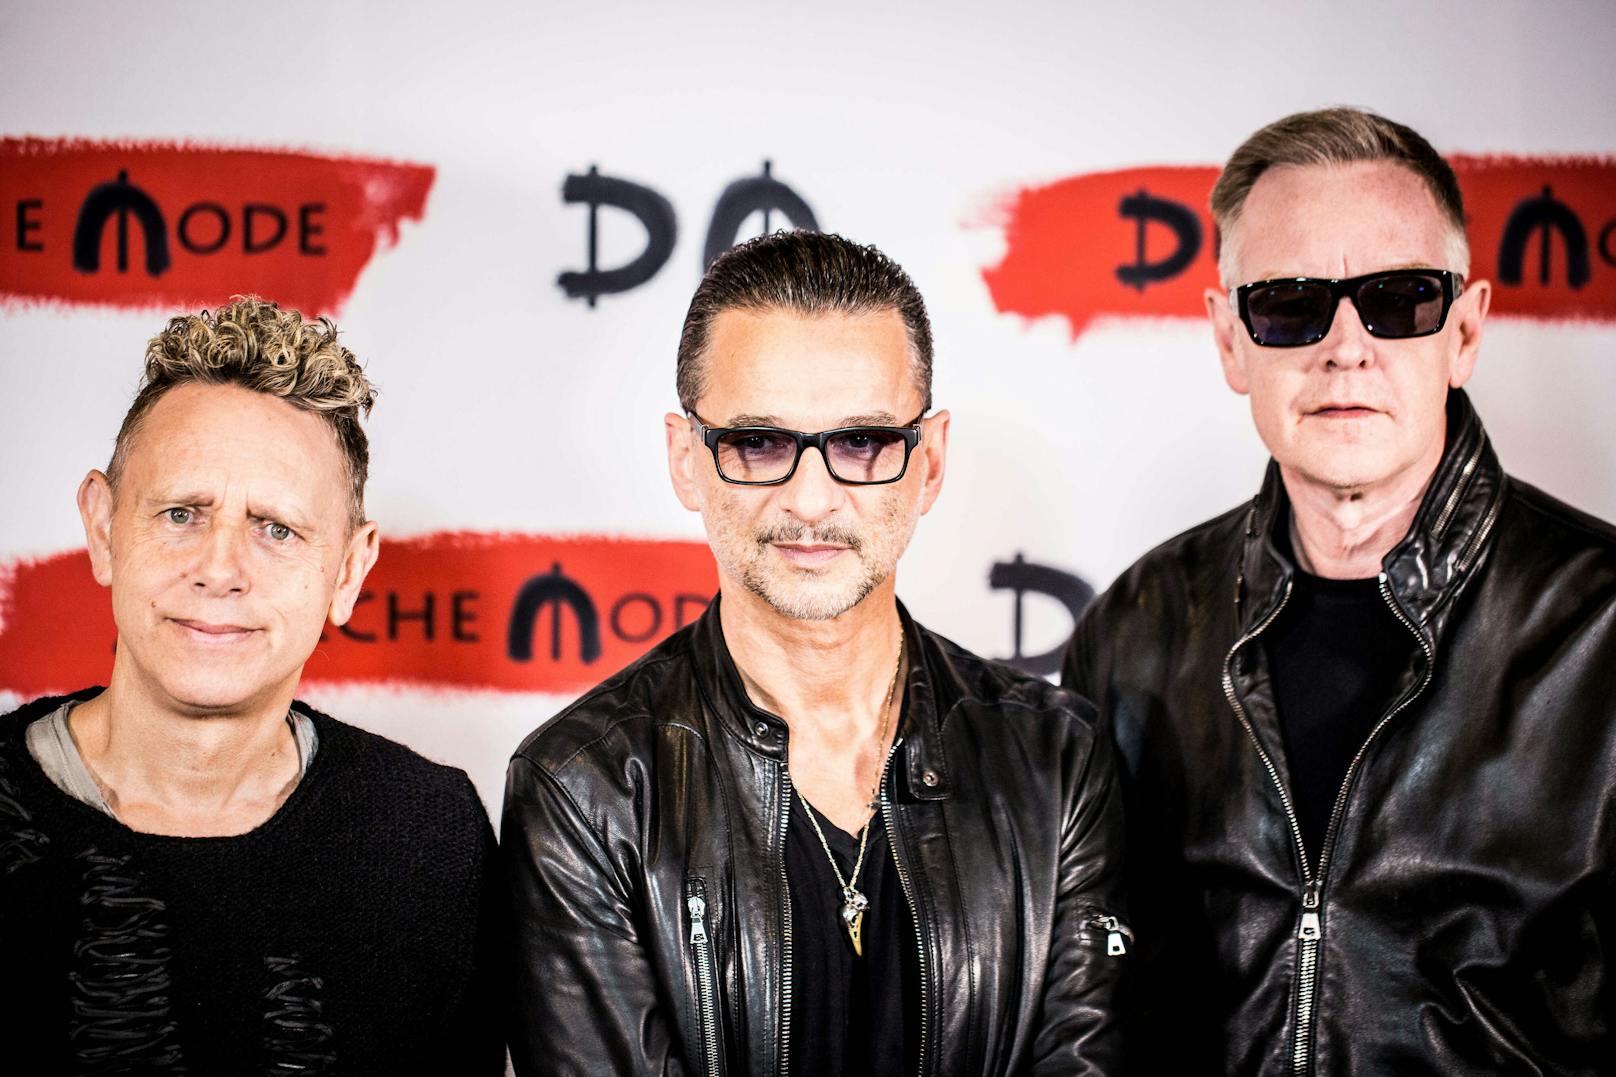 Depeche Mode-Keyboarder tot – daran starb Andy Fletcher